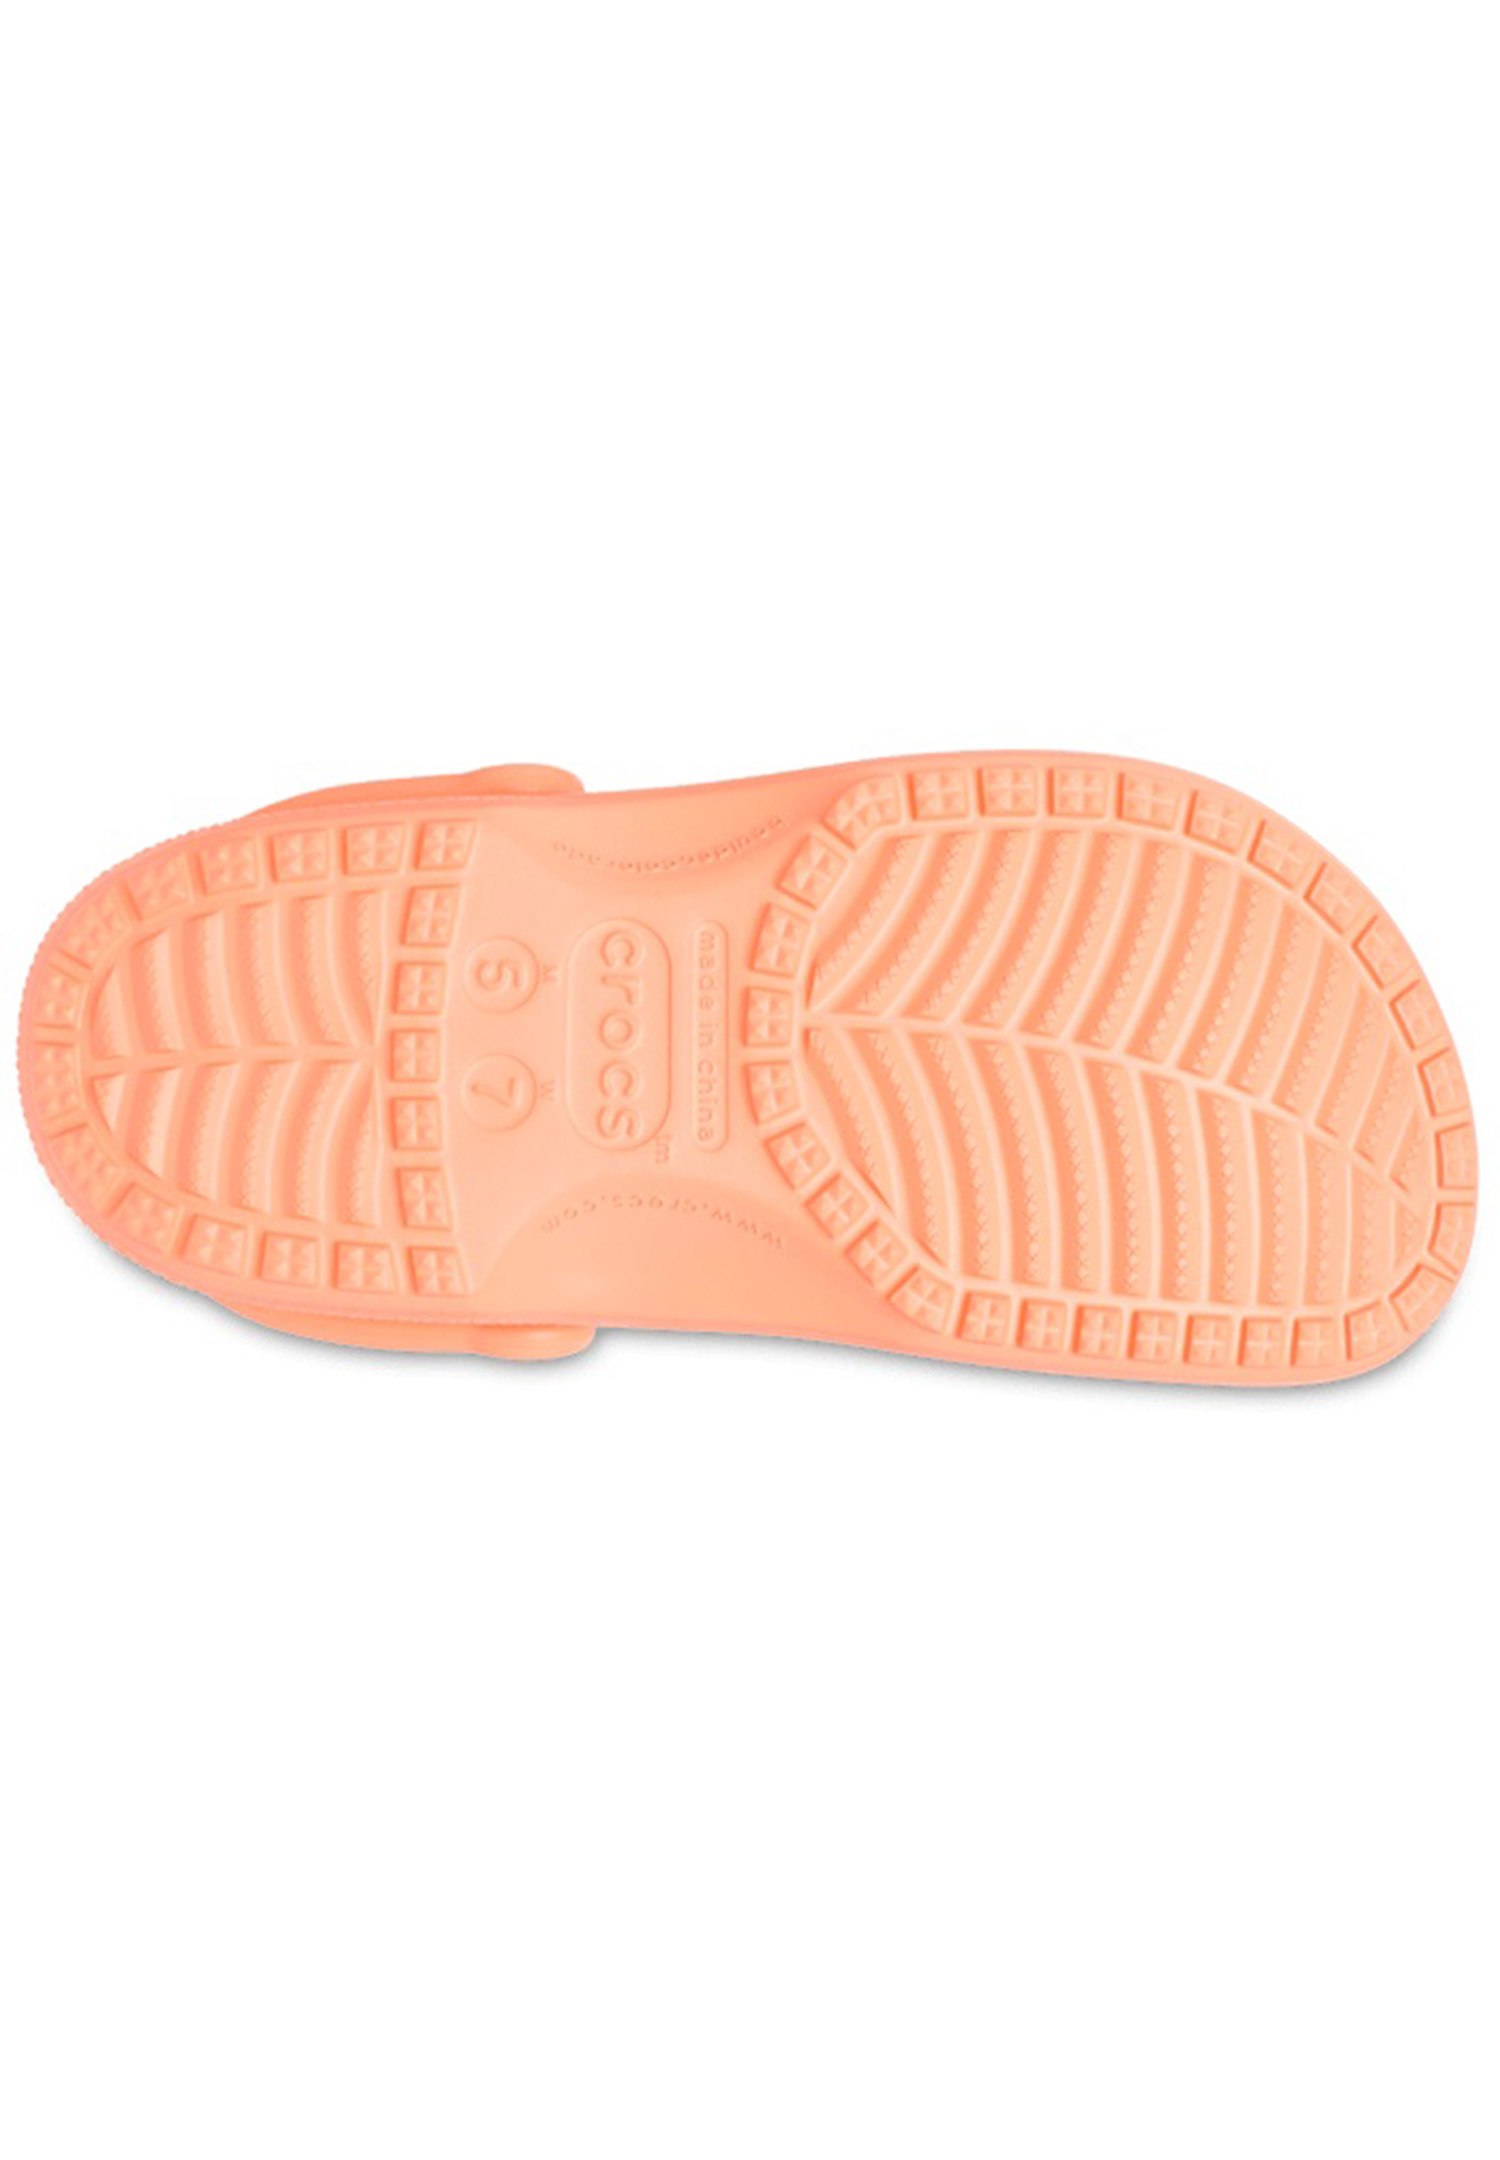 Crocs Classic Clog Unisex Erwachsene Sandalen 10001-83E Papaya 